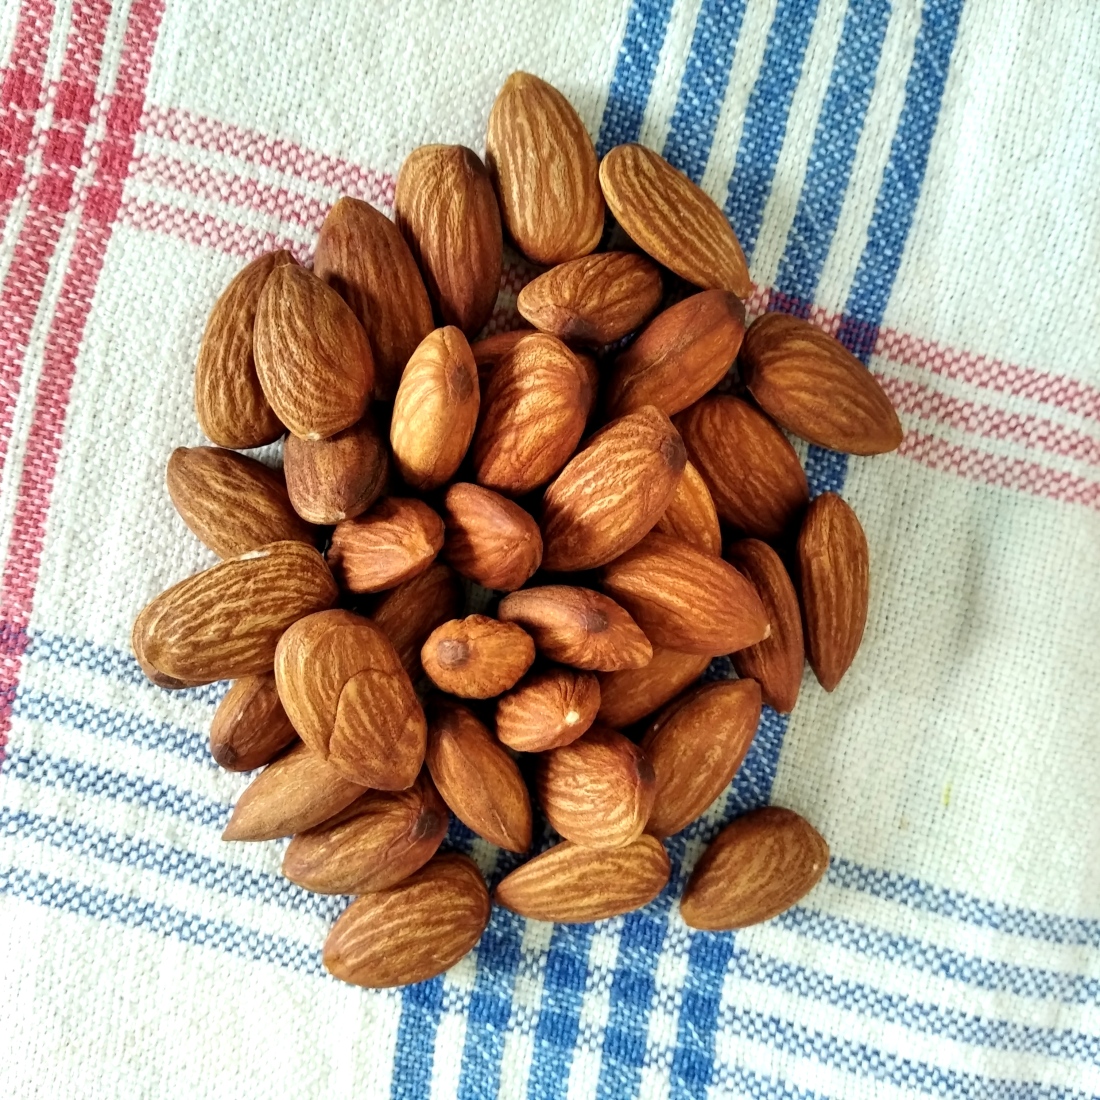 Healthy Almond Nuts in Bali